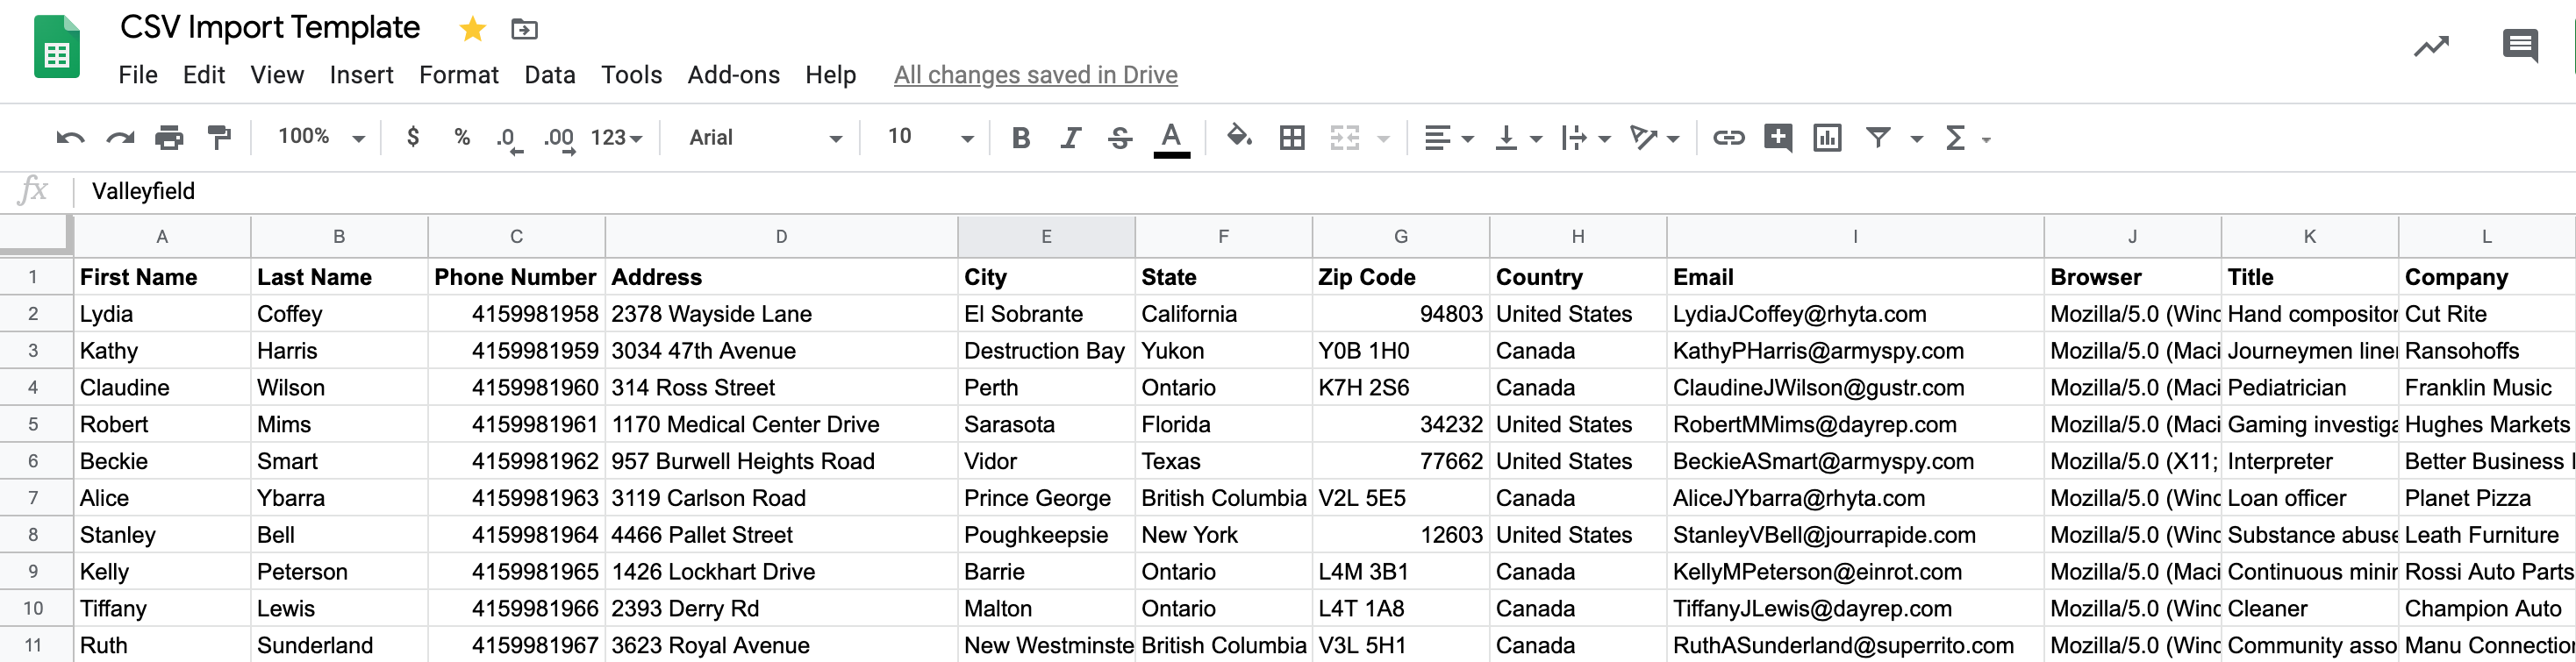 sample CSV file on Google Sheets